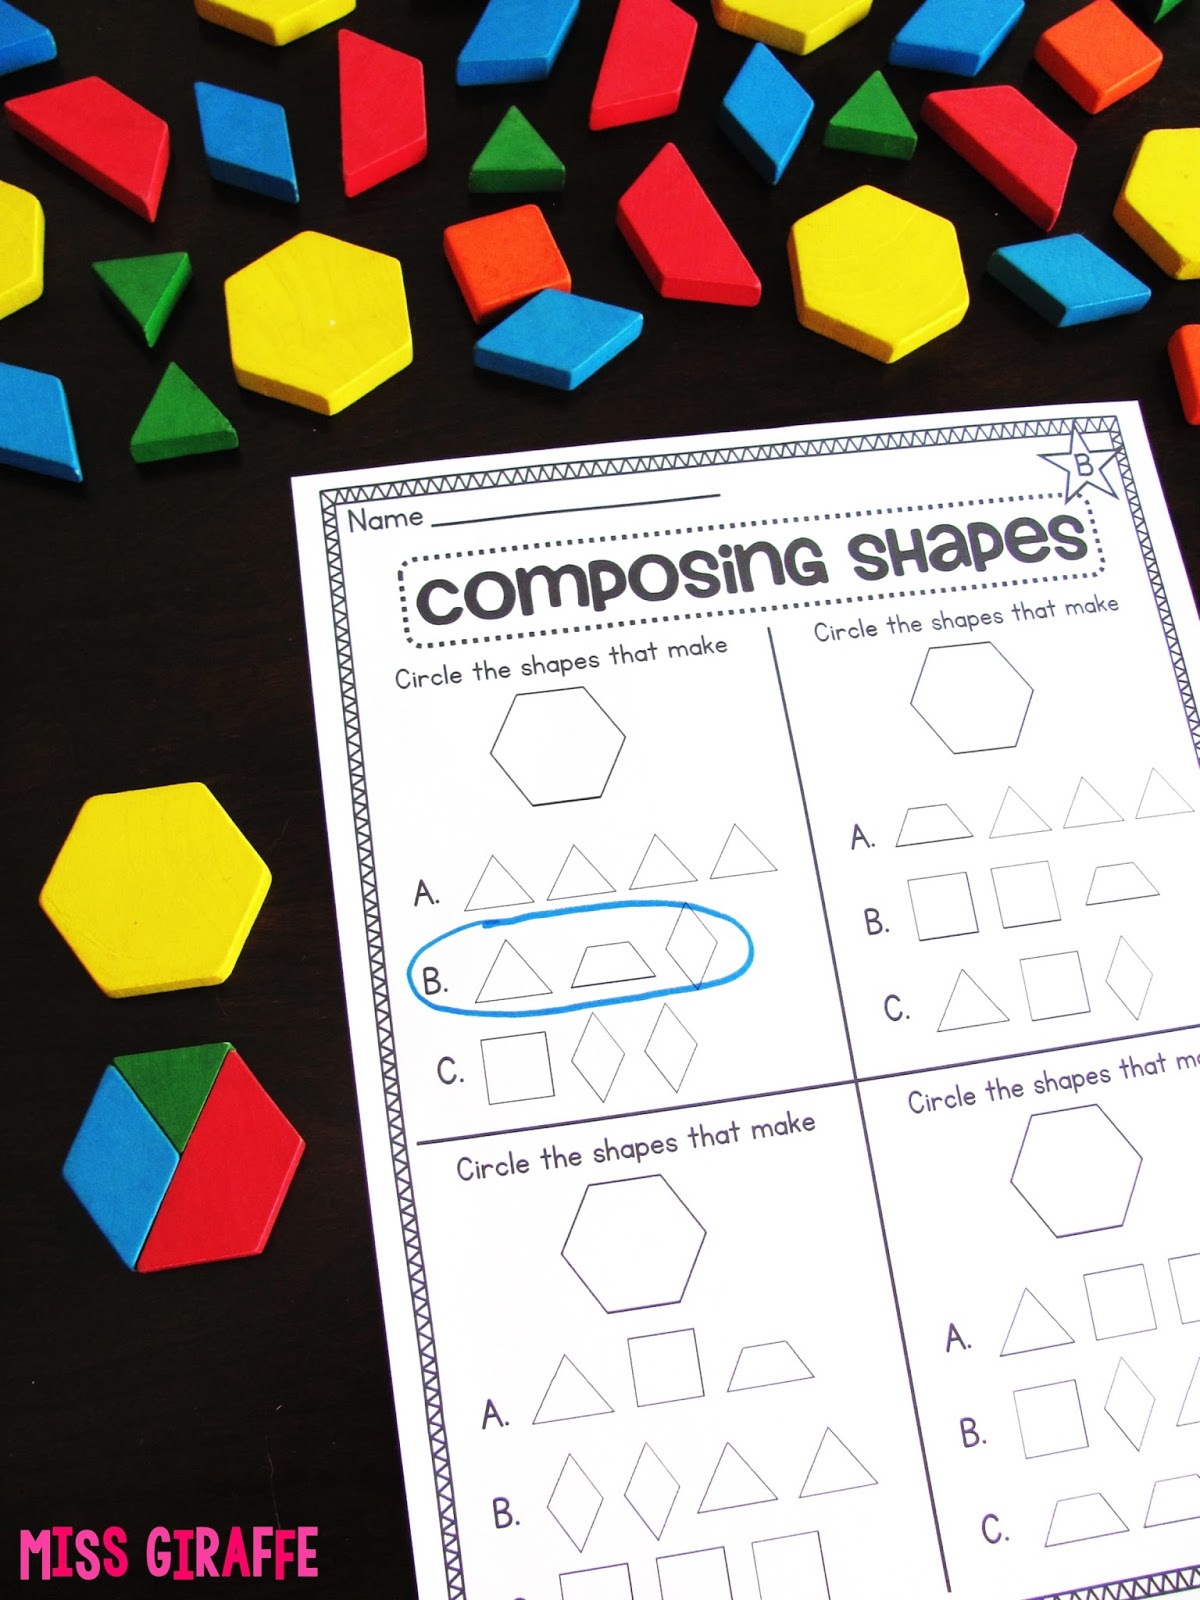 miss giraffe s class composing shapes in 1st grade